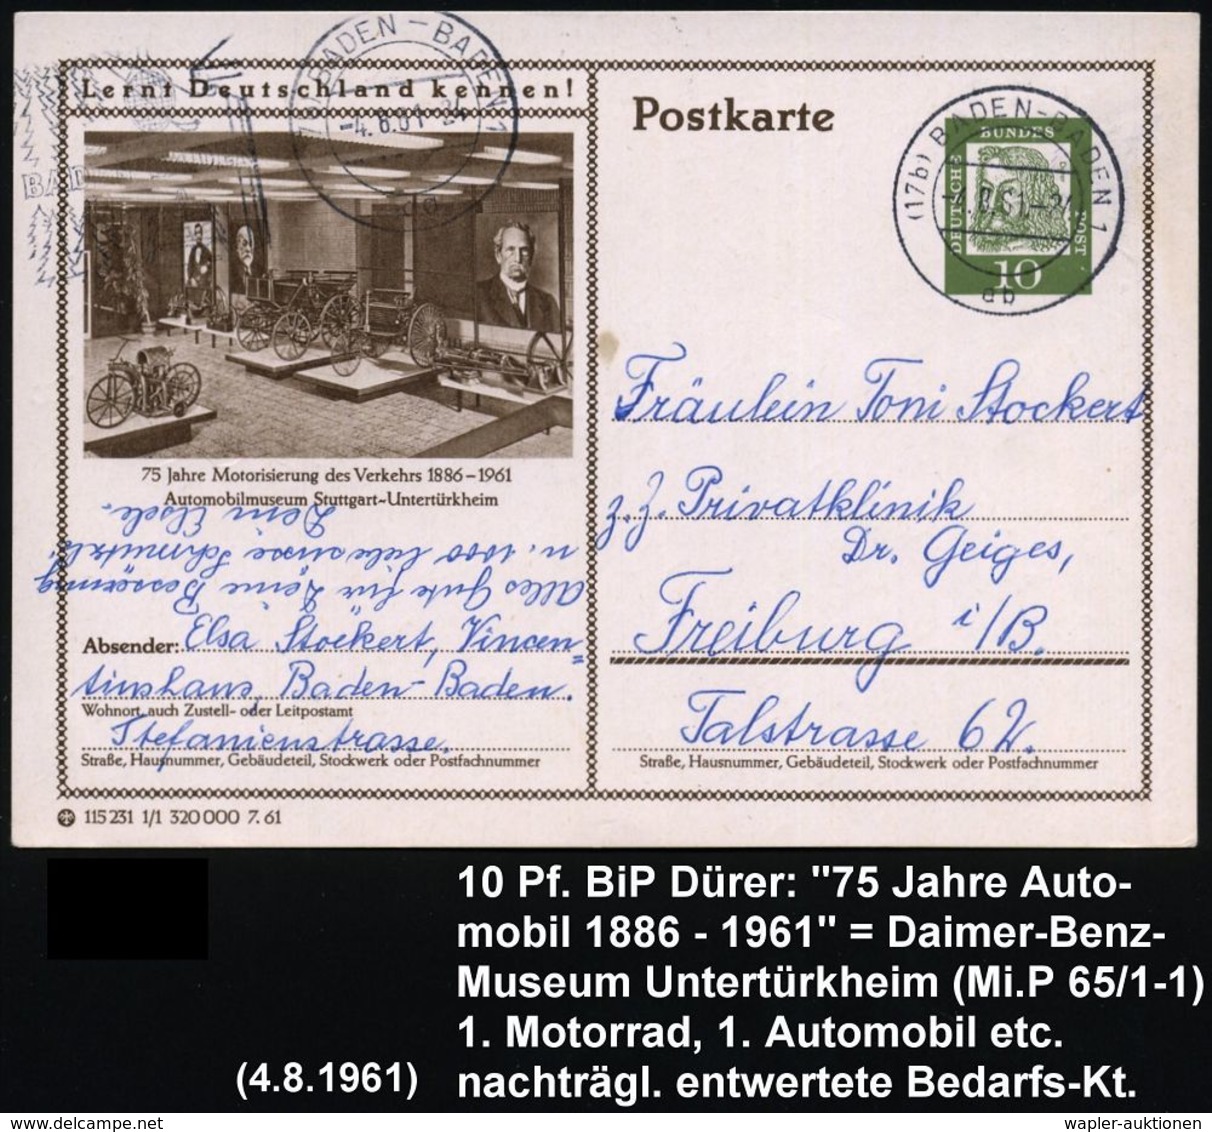 Stuttgart-Untertürkheim 1961 (4.6.) 10 Pf. BiP Dürer, Grün: Automobilmuseum Daimler-Benz Automobile, Motorrad (gest. BAD - Automobili